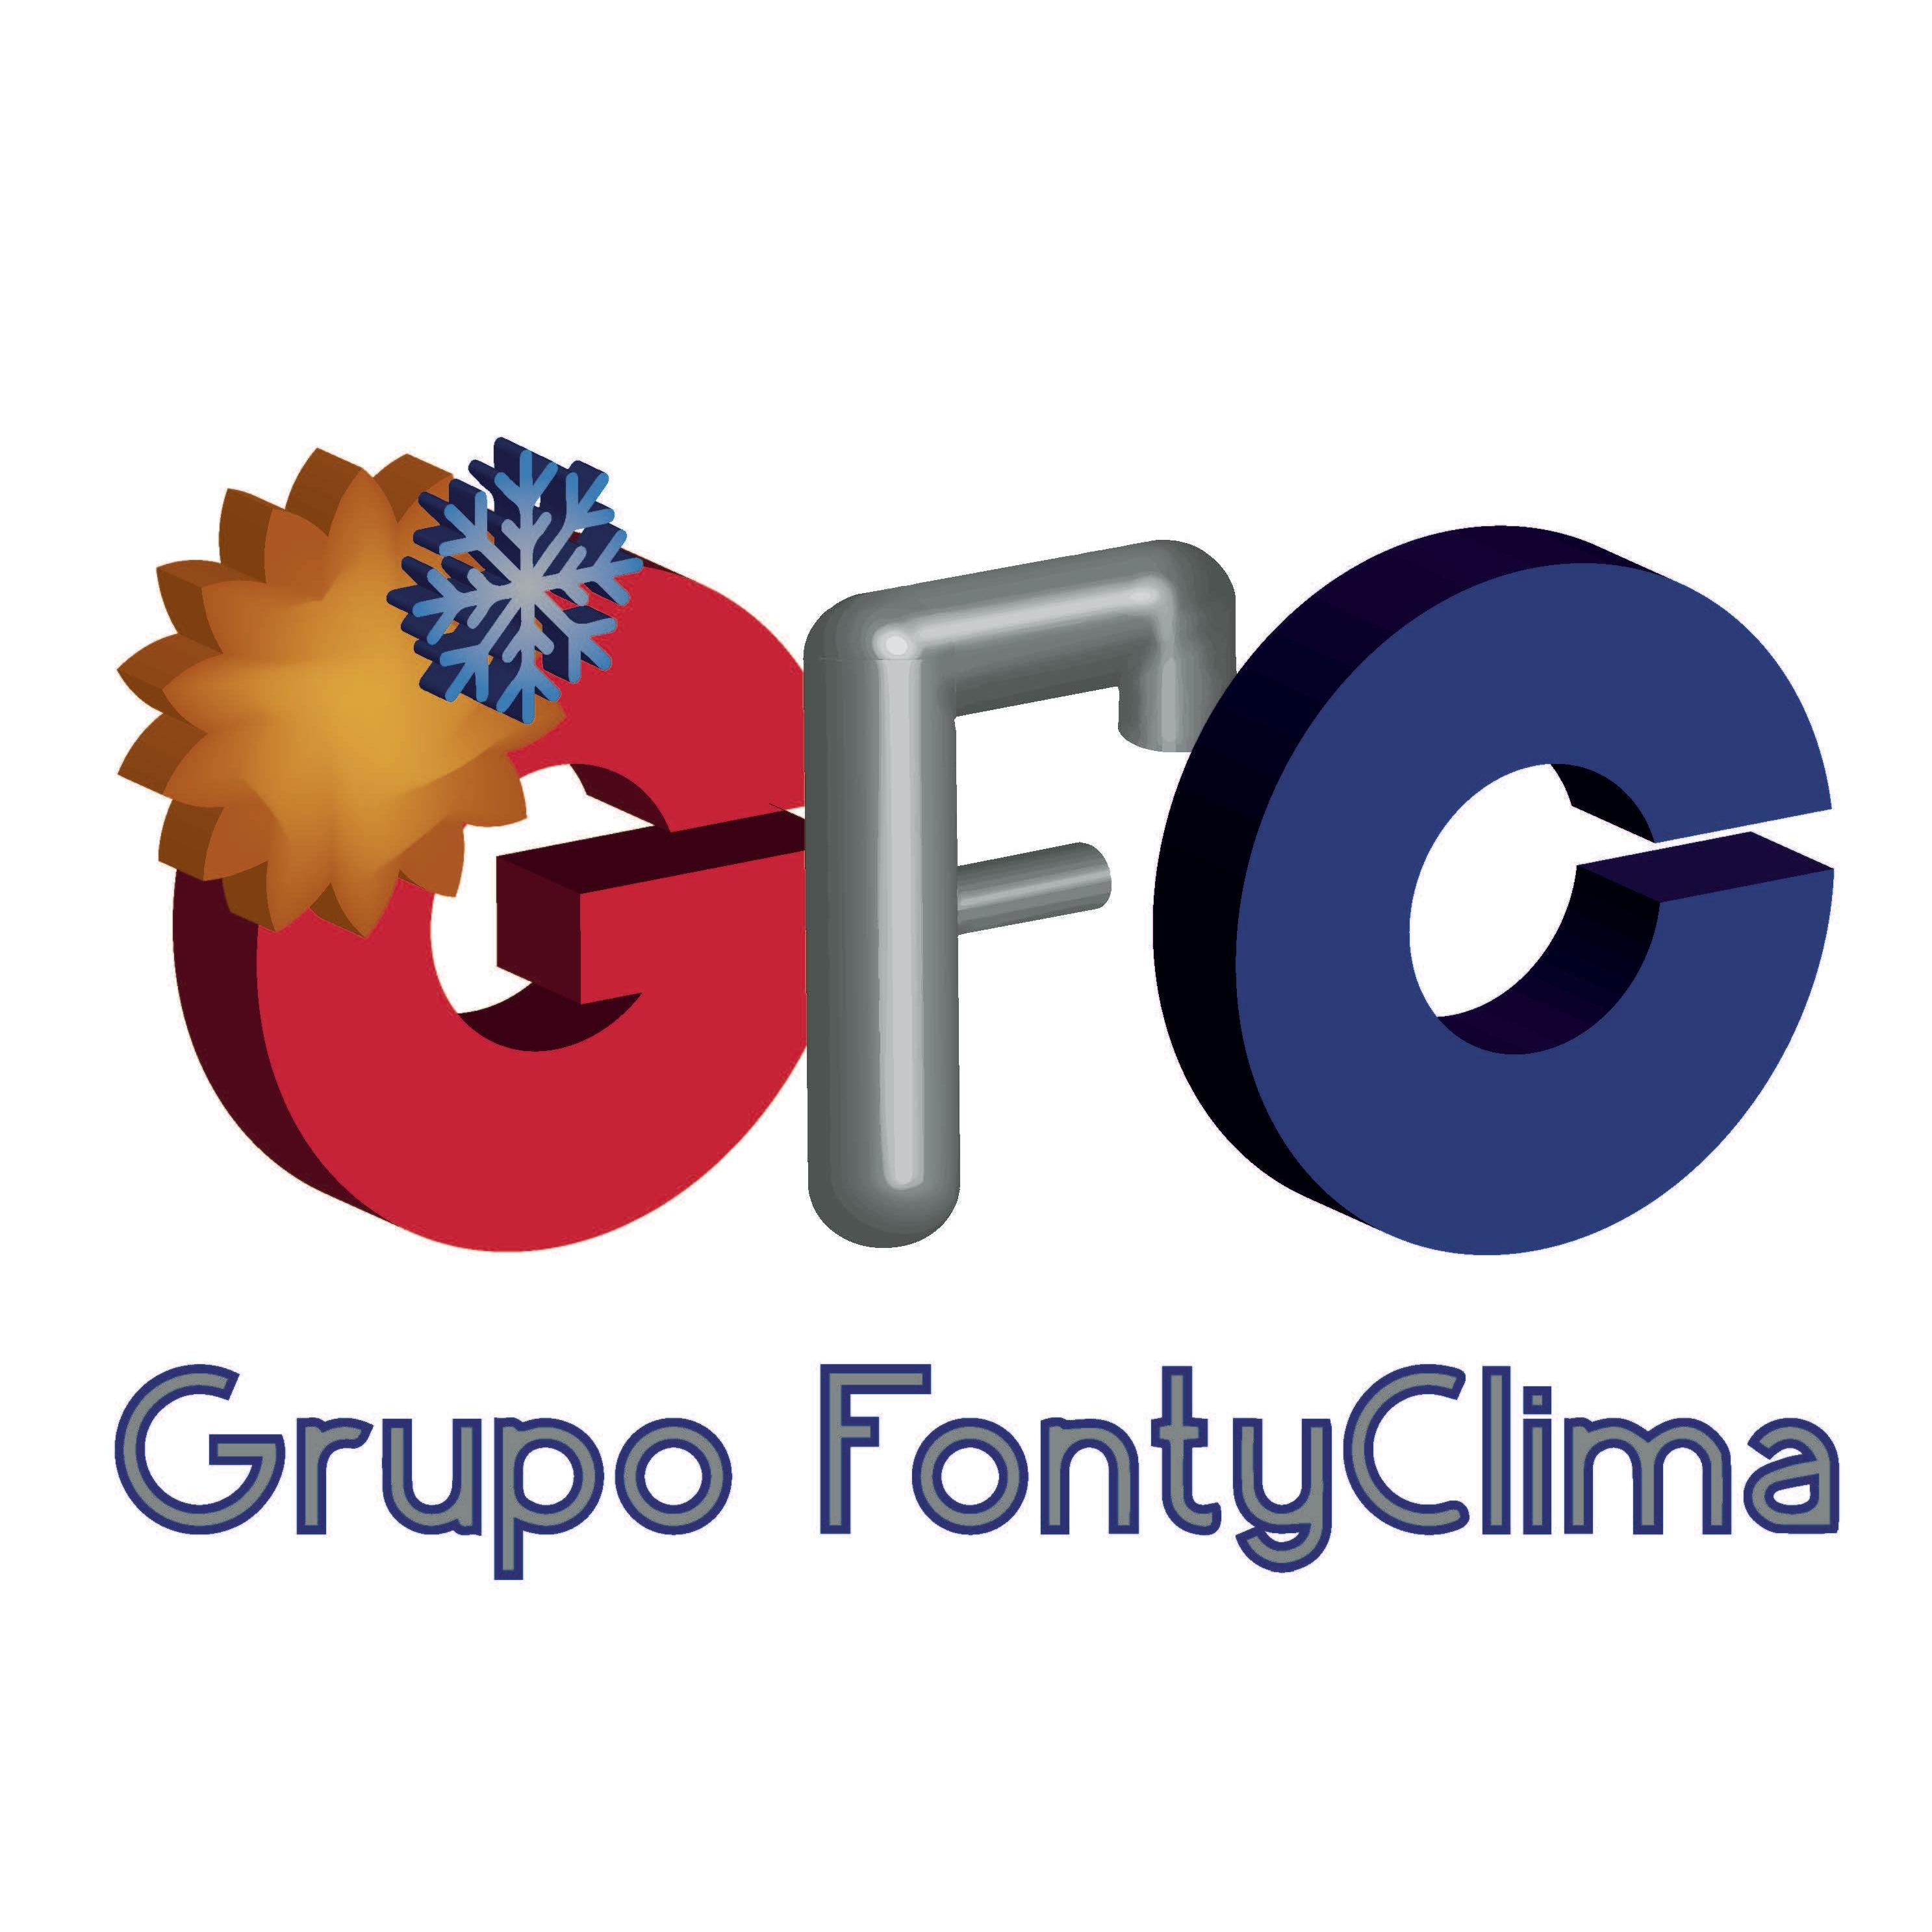 Grupo Fontyclima Logo